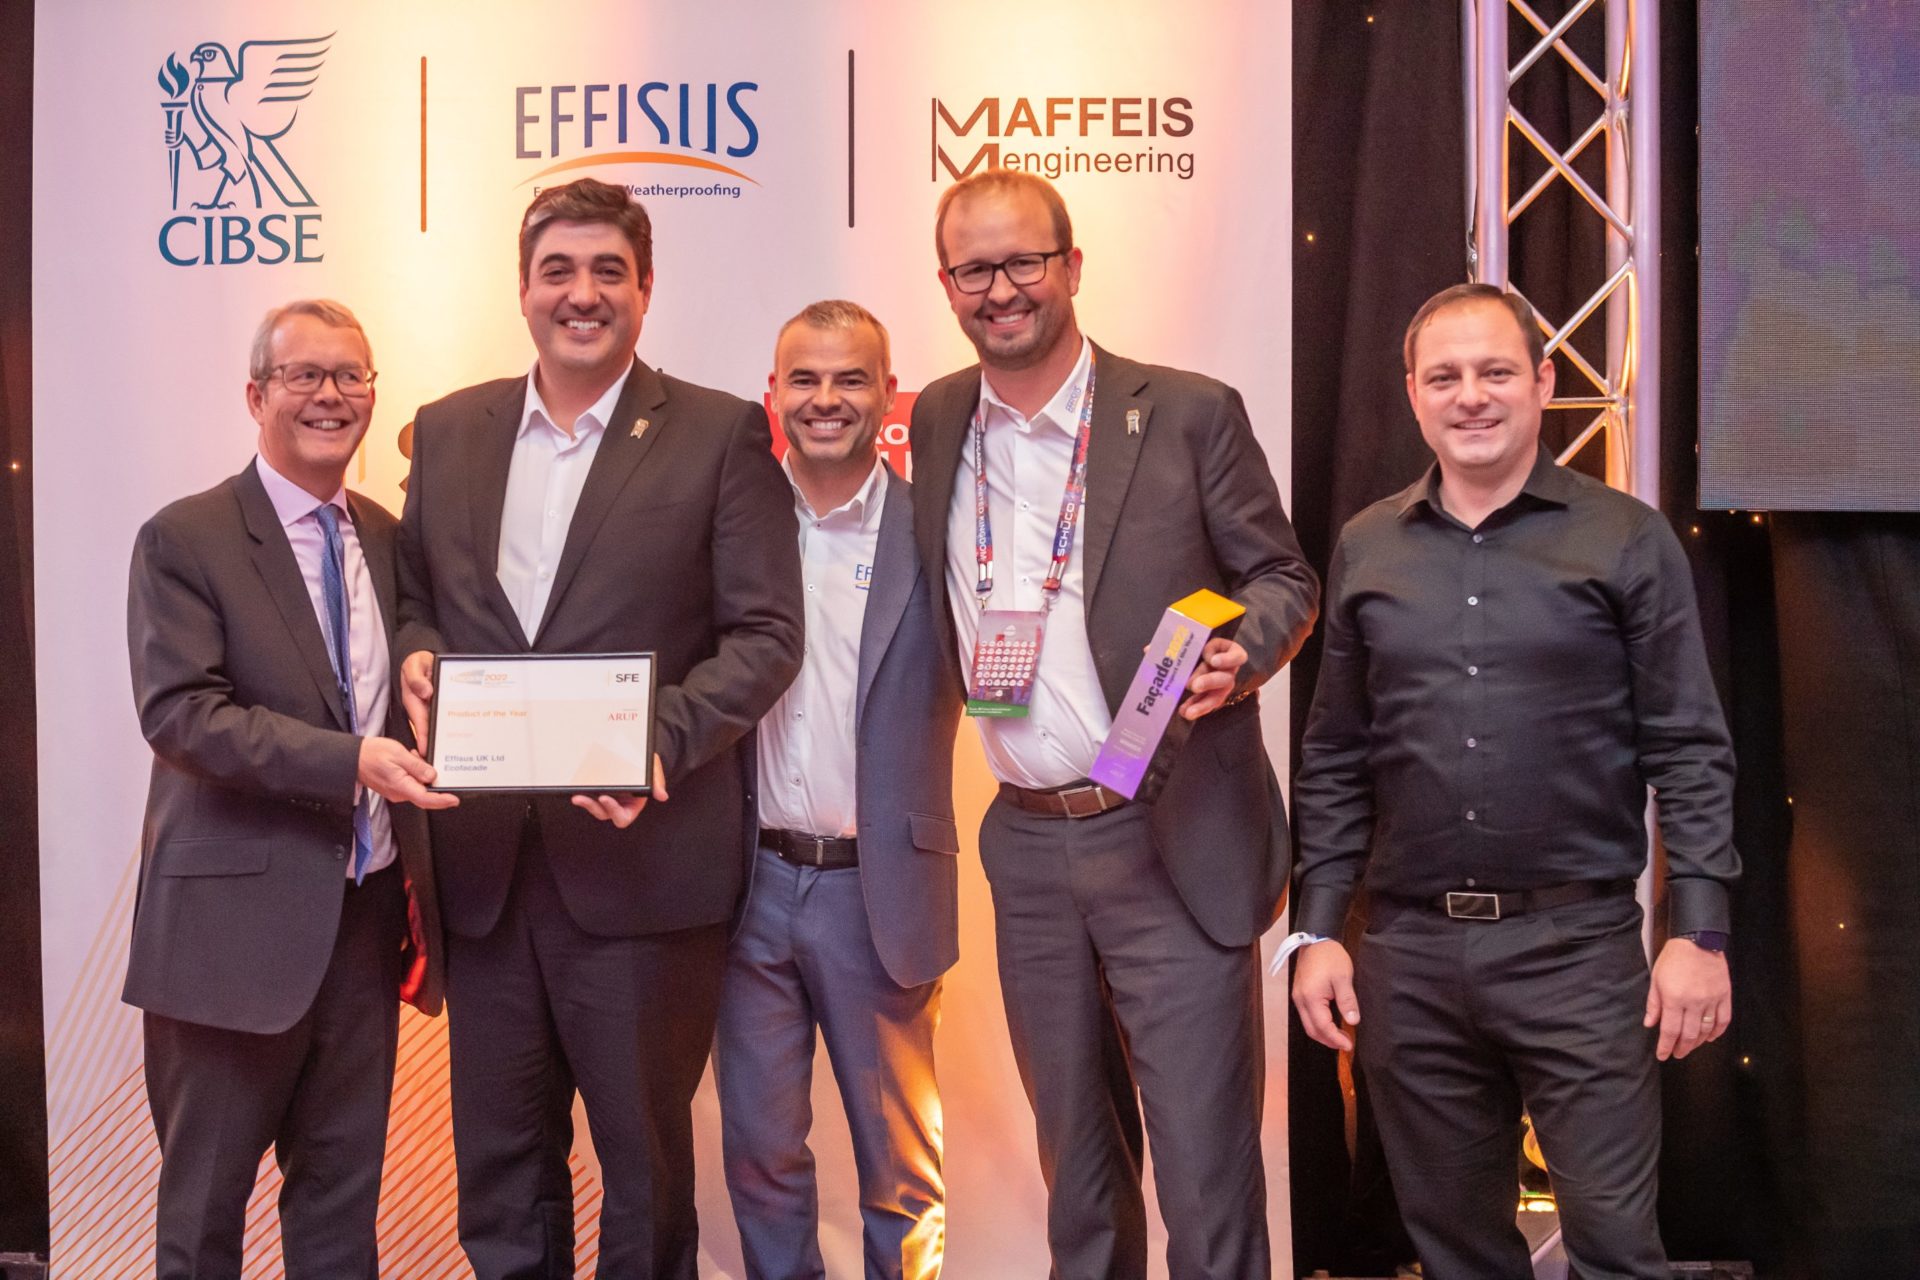 EFFISUS, empresa portuguesa, premiada no Reino Unido